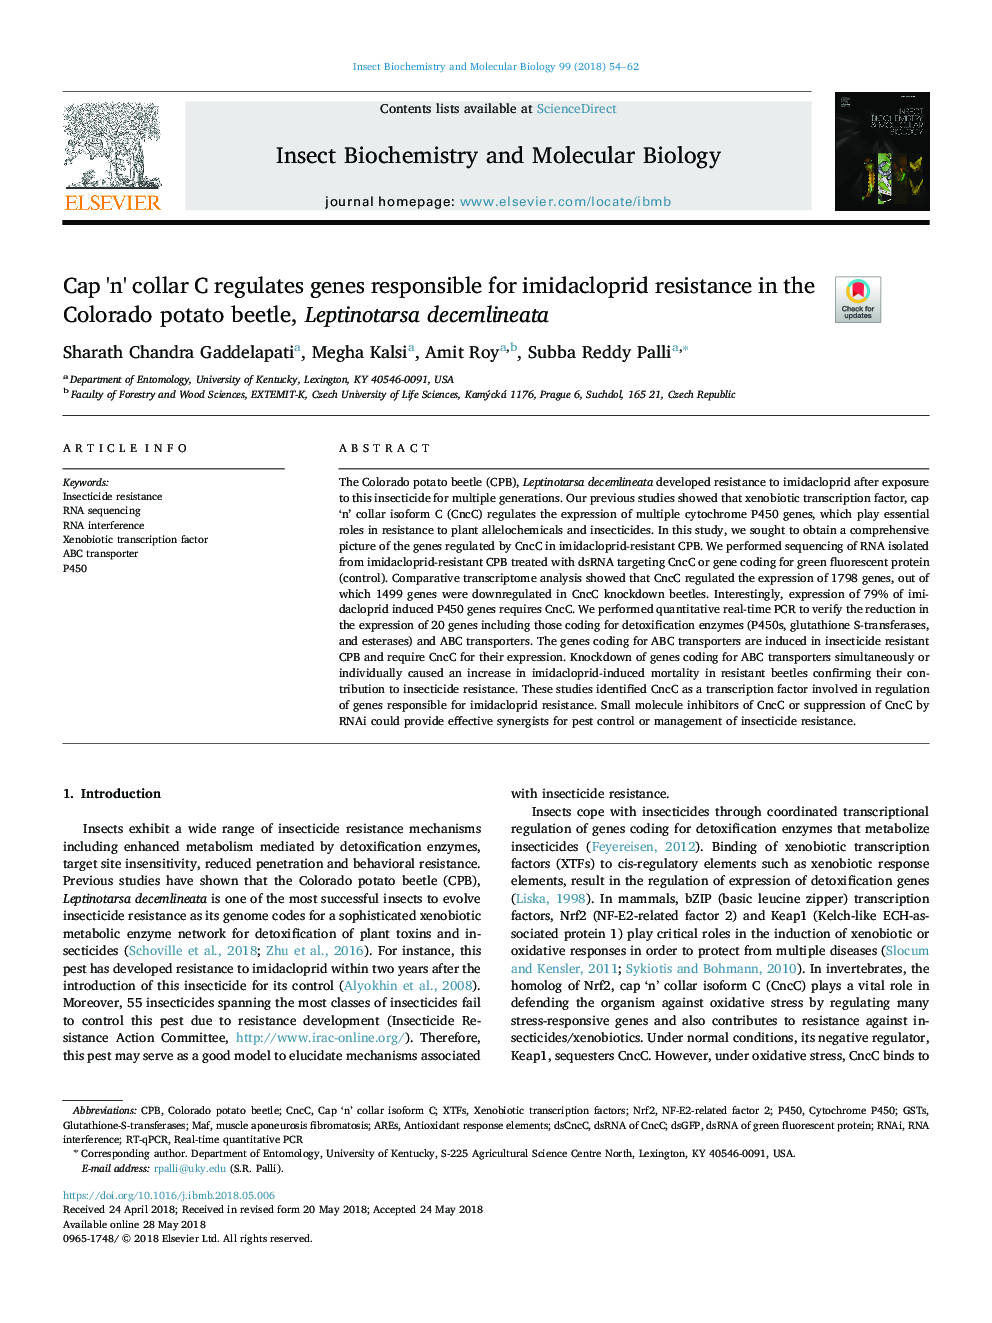 Cap 'n' collar C regulates genes responsible for imidacloprid resistance in the Colorado potato beetle, Leptinotarsa decemlineata